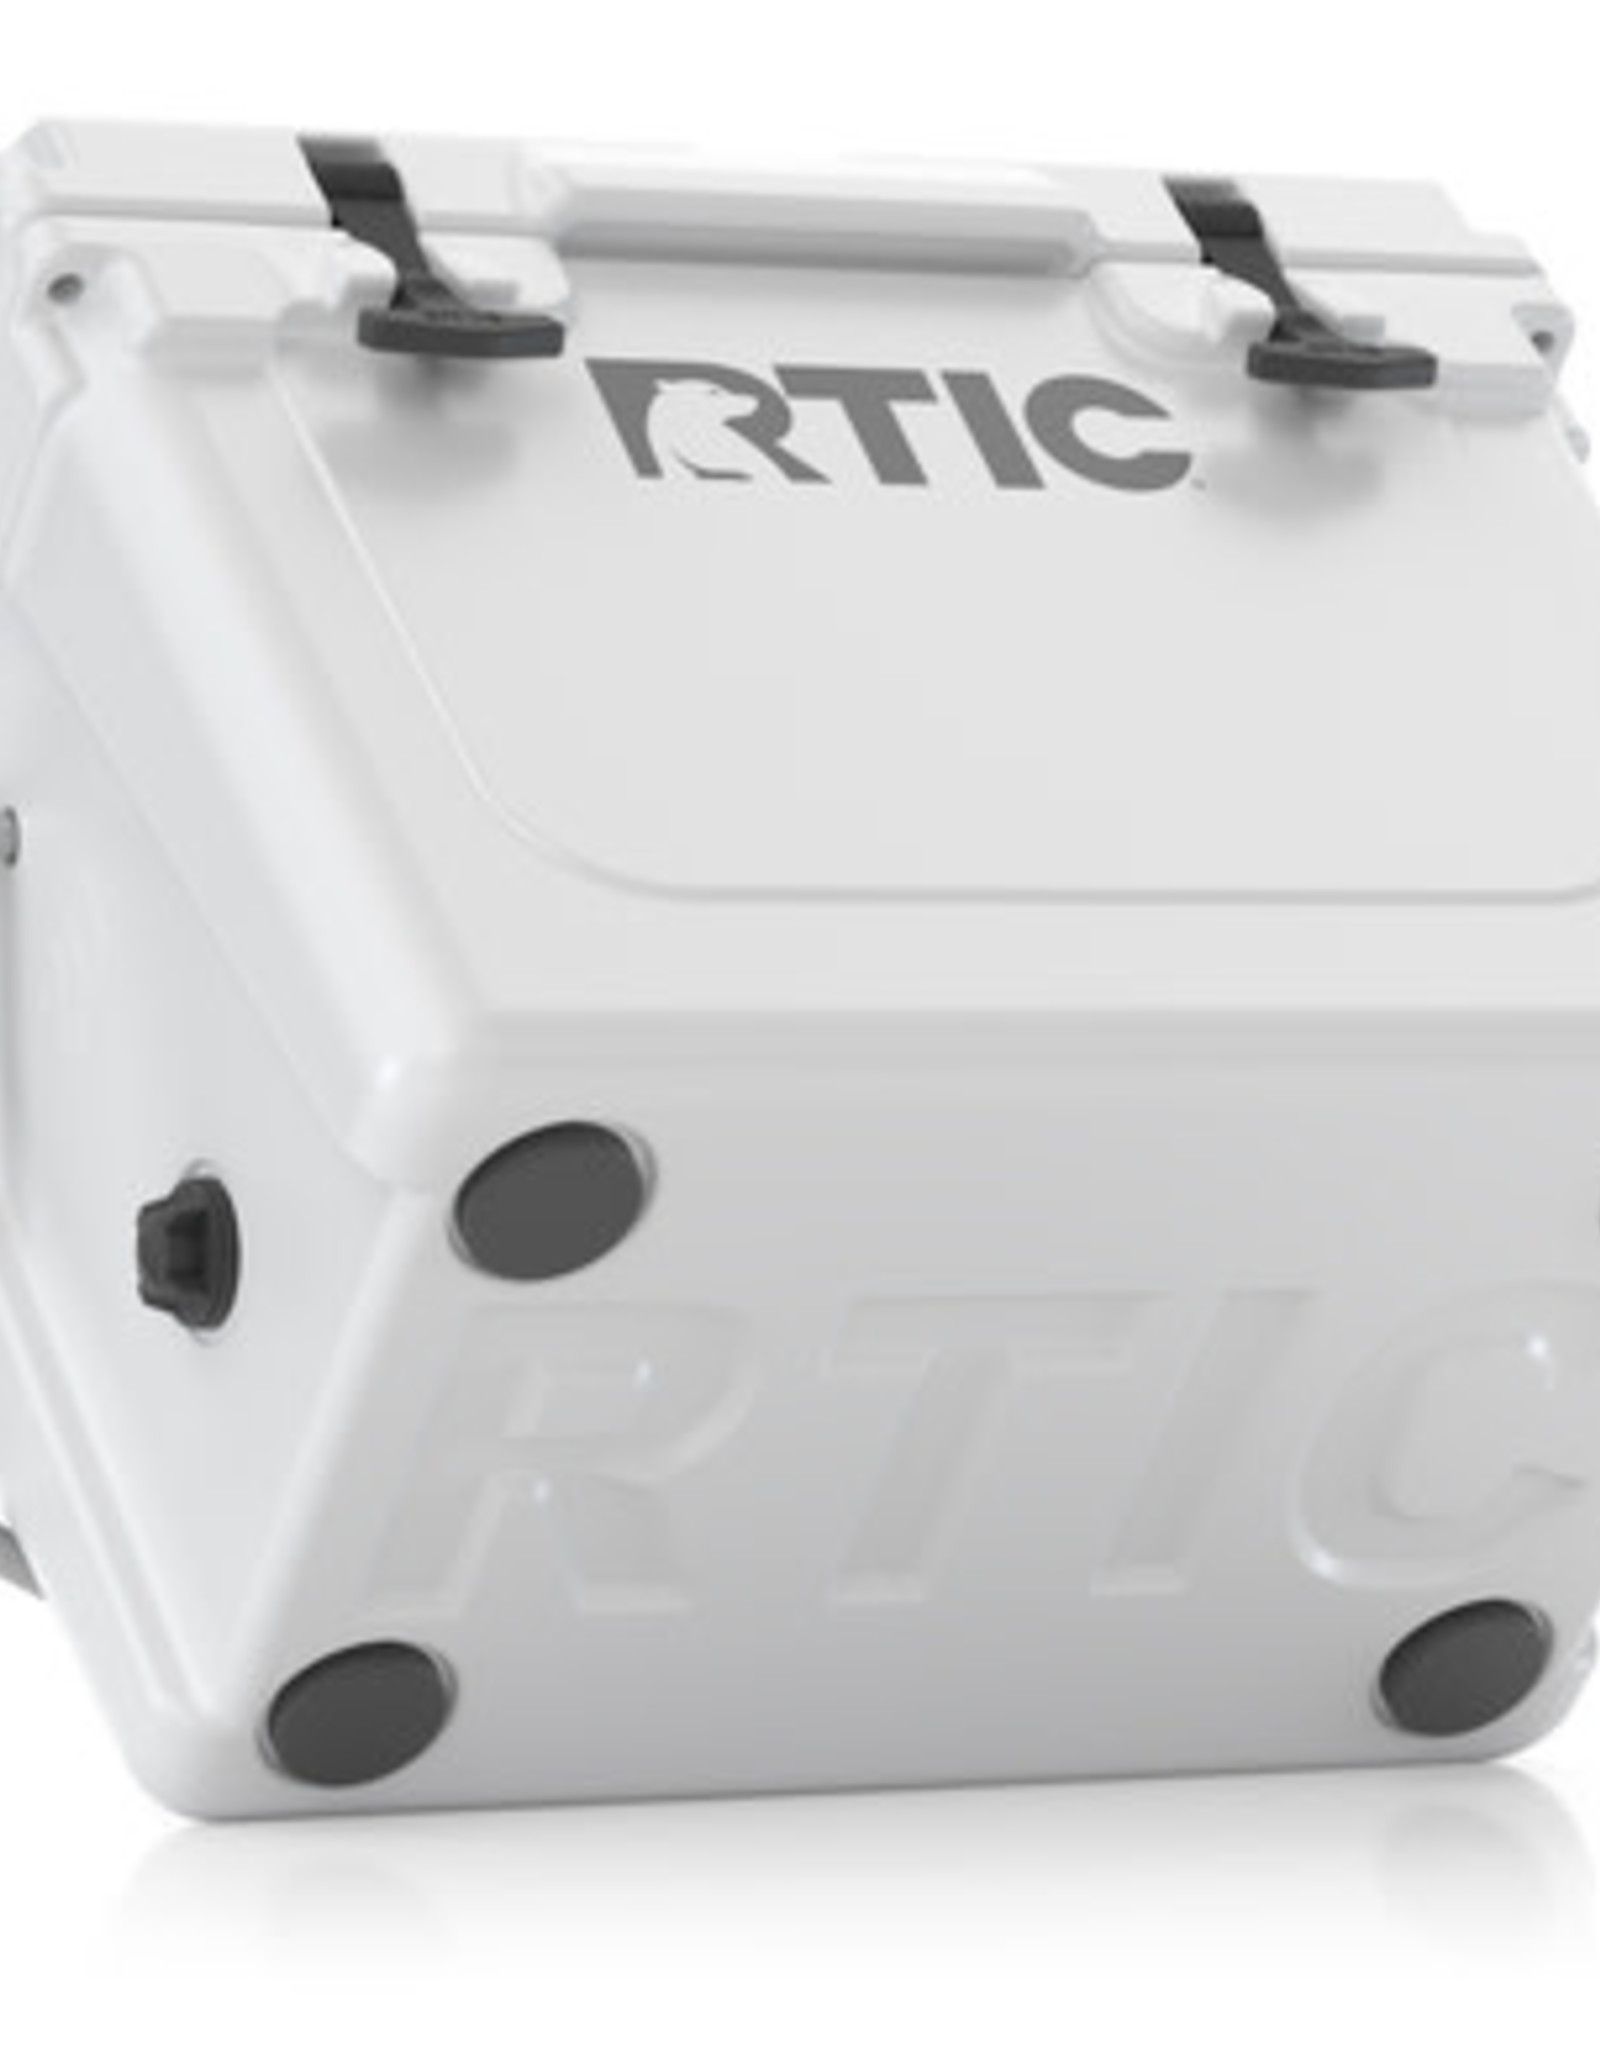 RTIC RTIC 20 White